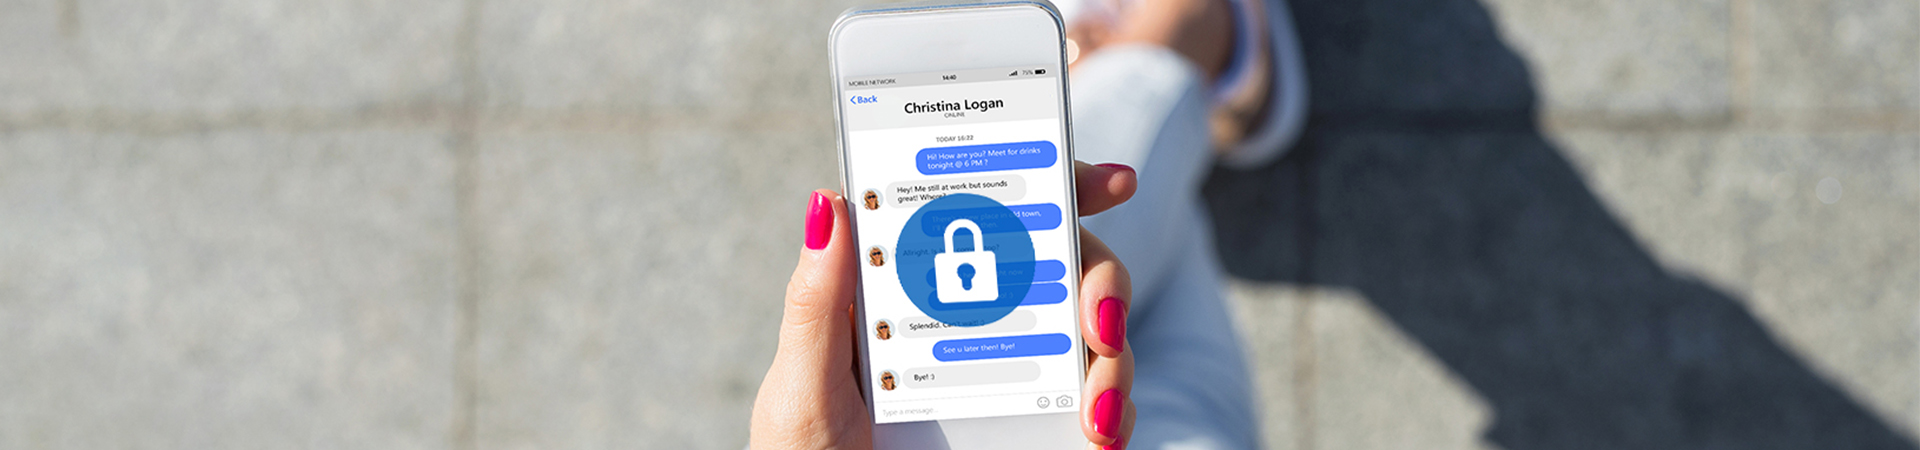 UX Audit of a Secure Mobile Messaging App